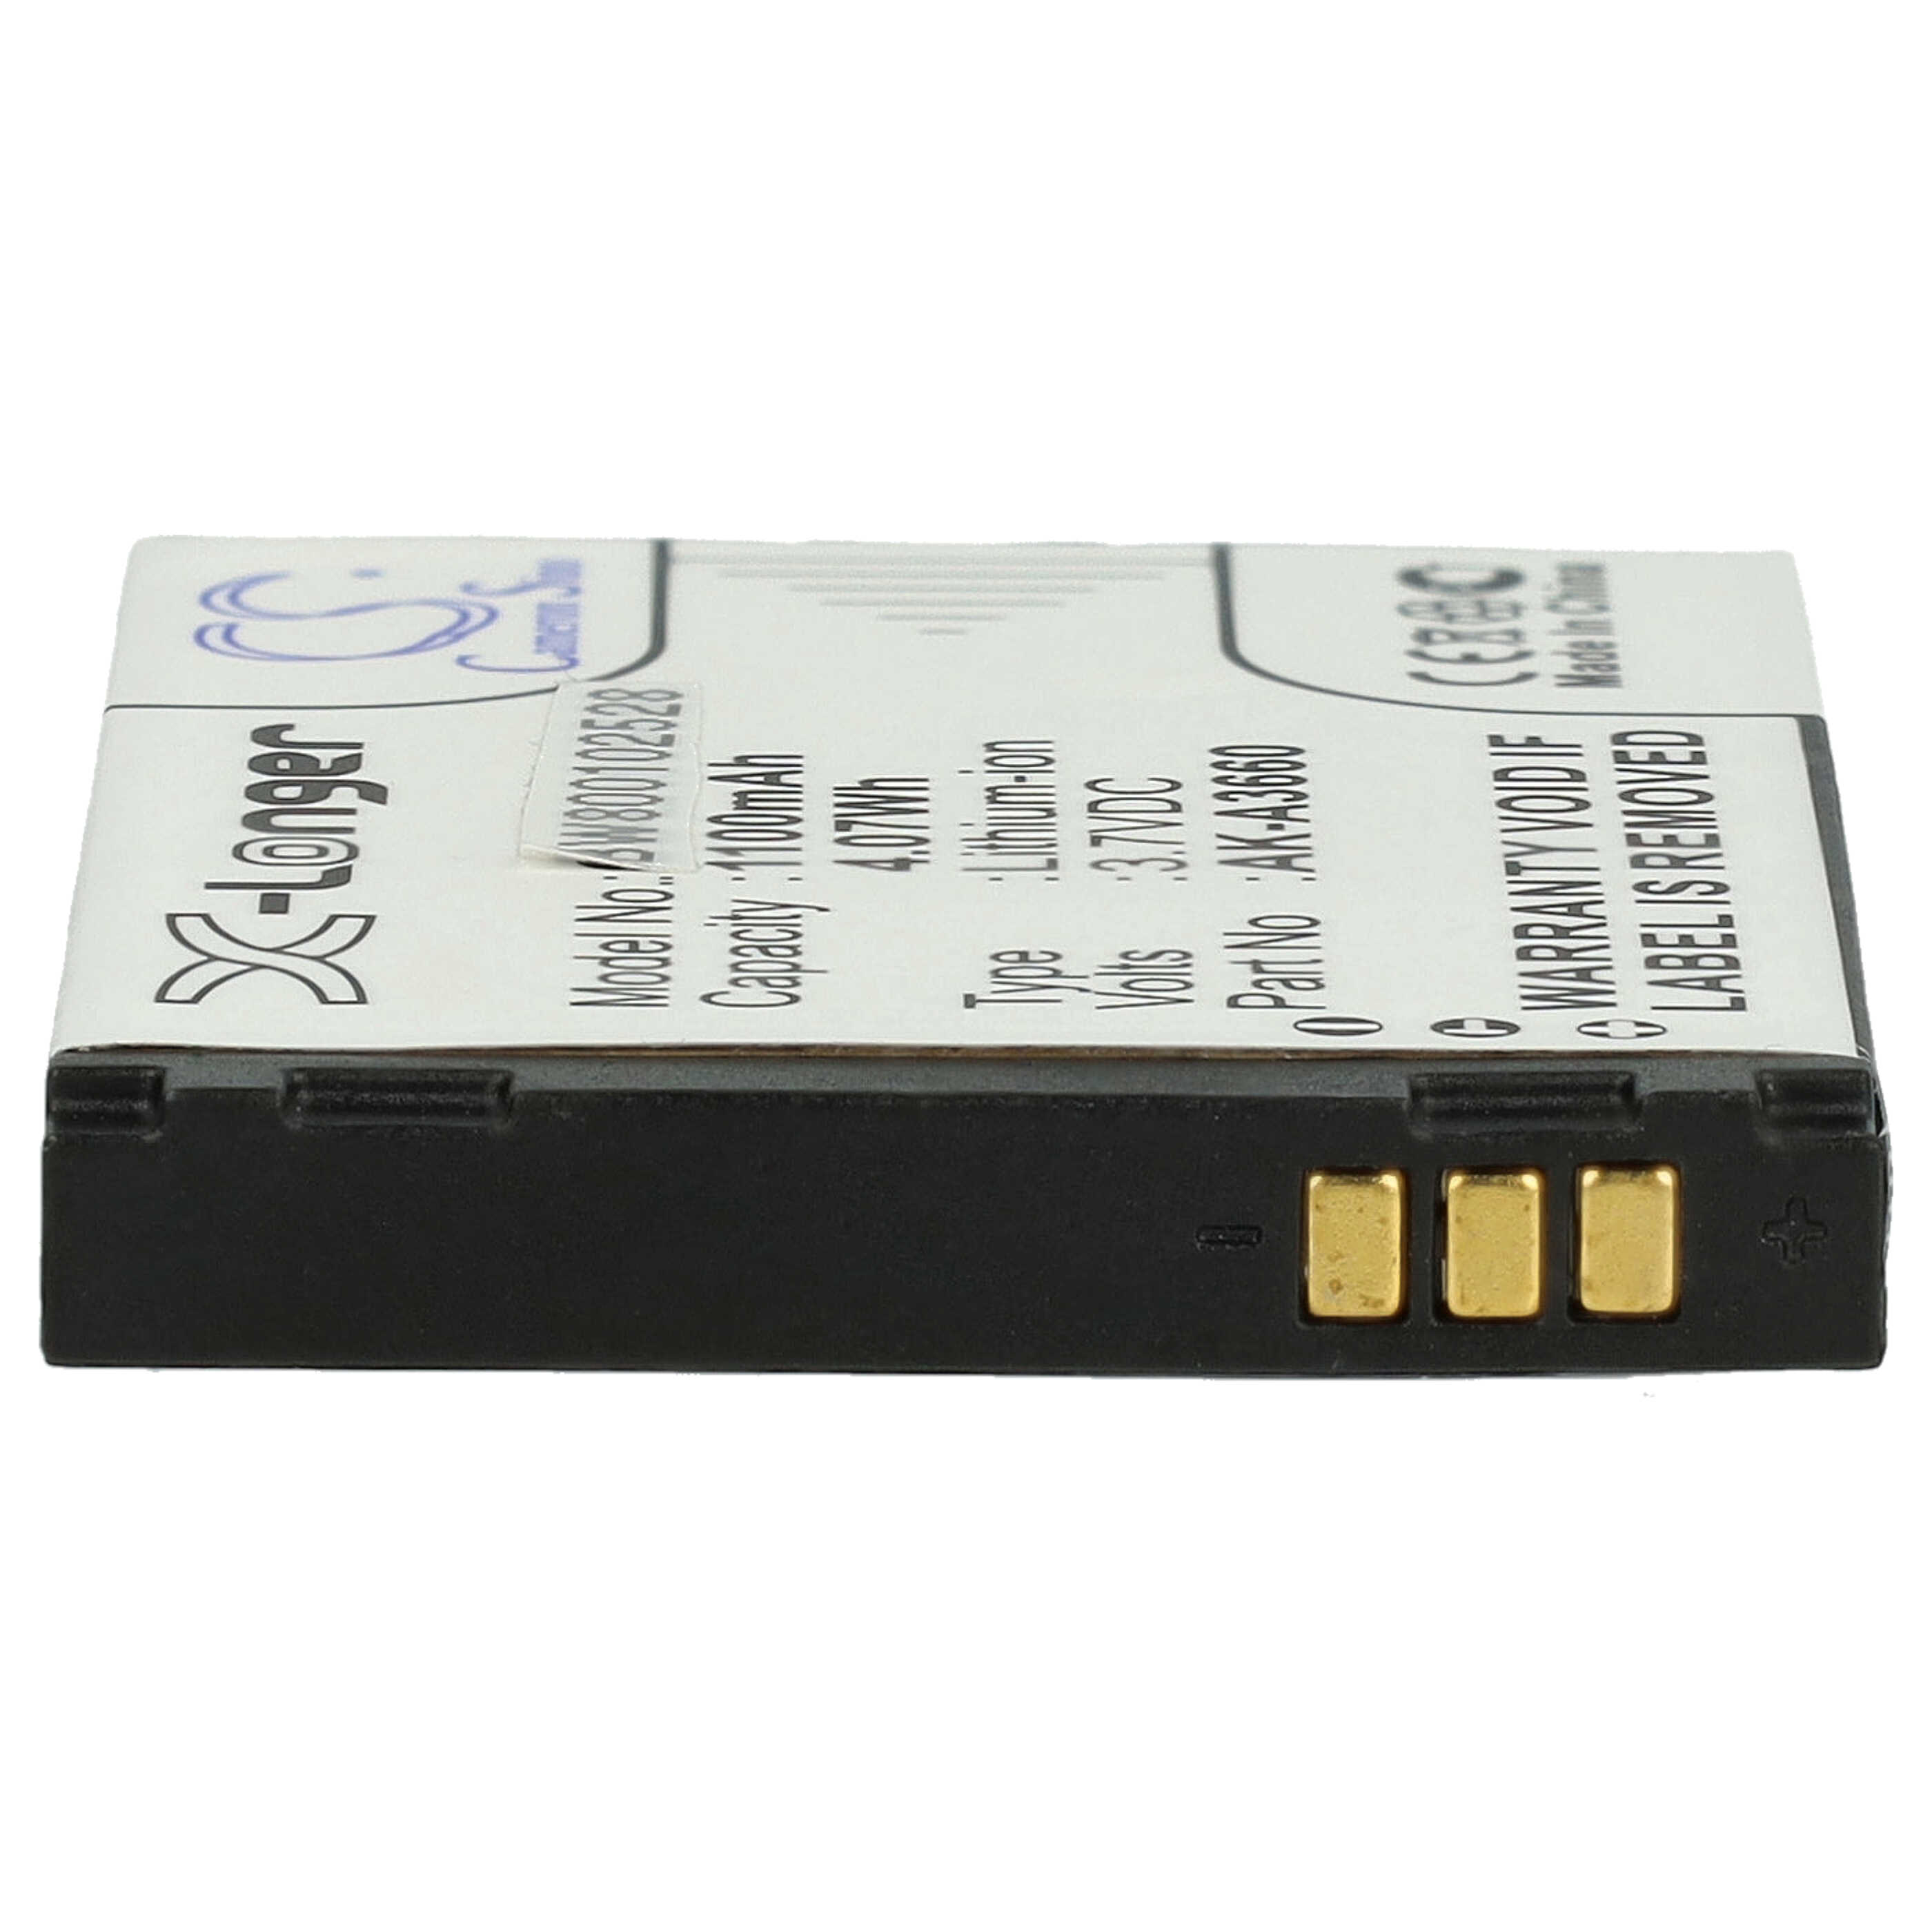 Mobile Phone Battery Replacement for Emporia AK-A3630 - 1100mAh 3.7V Li-Ion